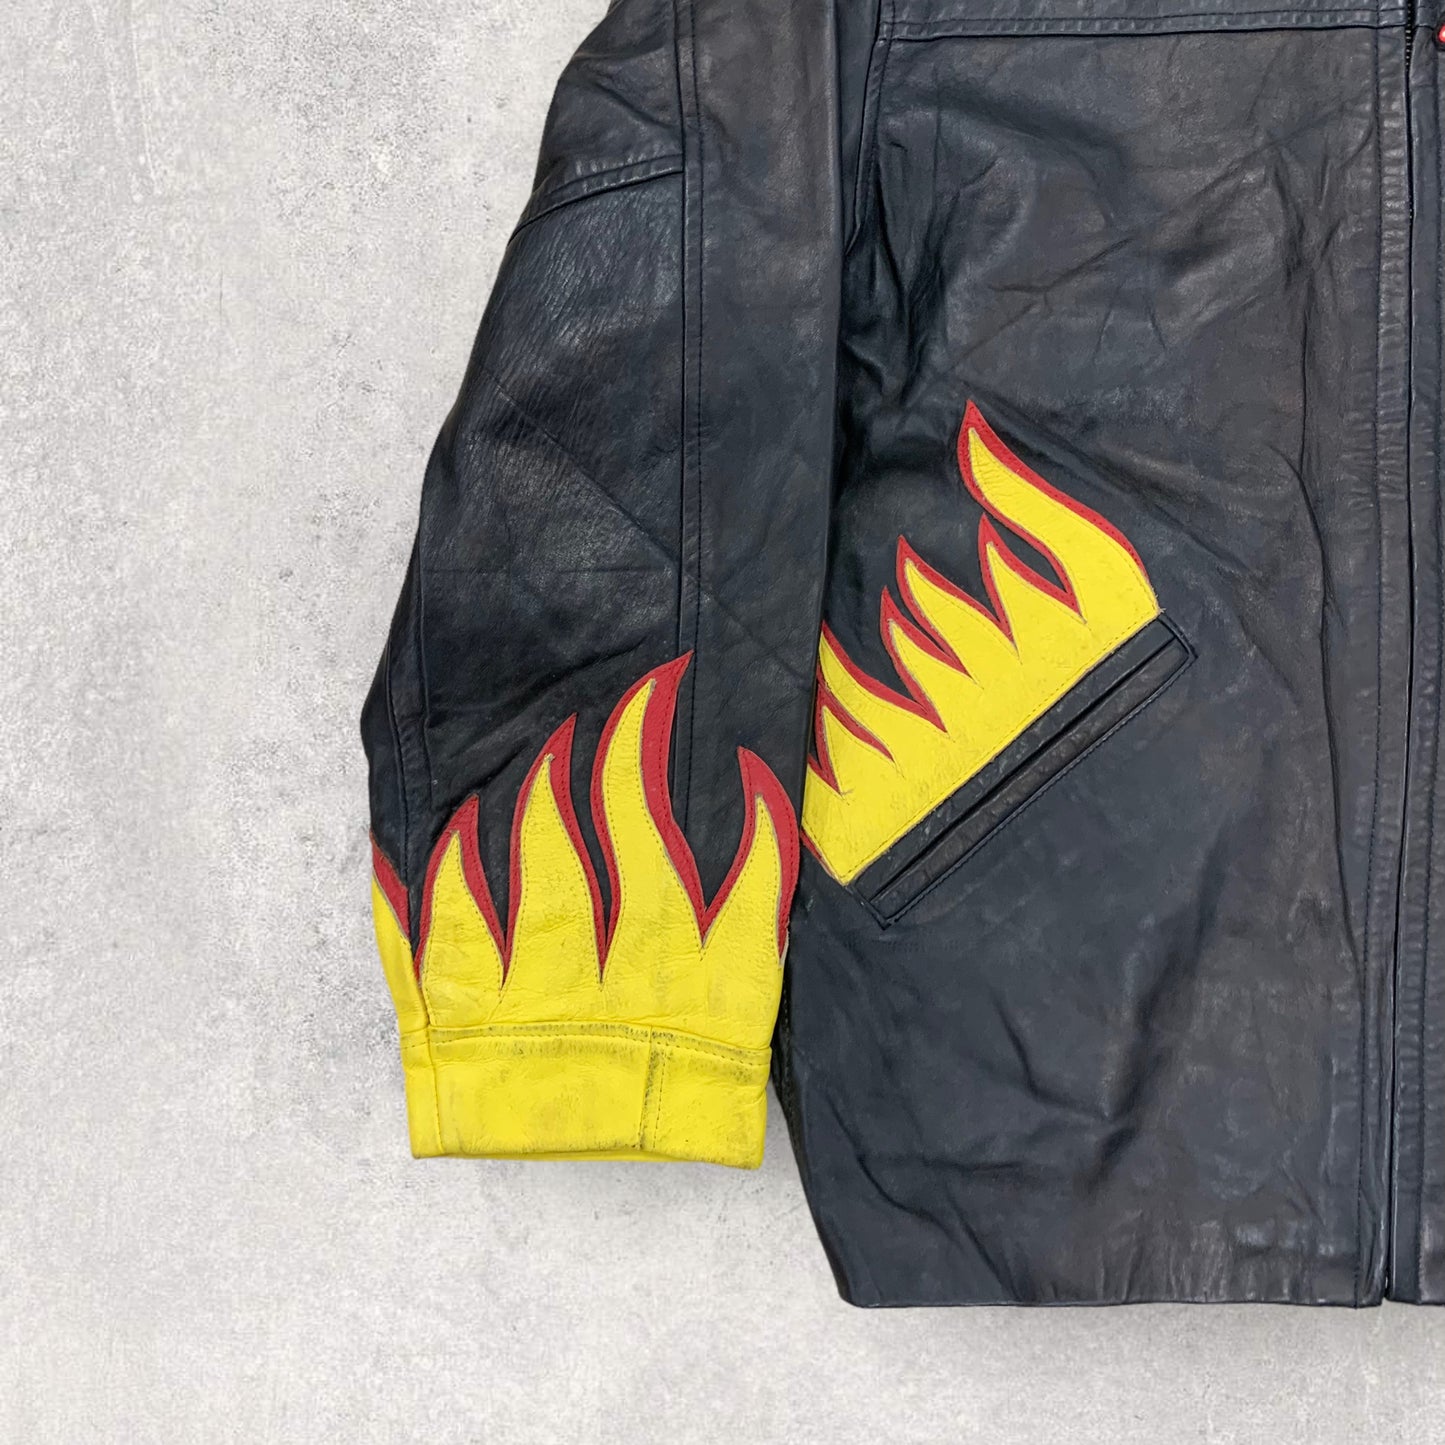 Vintage leather jacket Avirex Racing - L